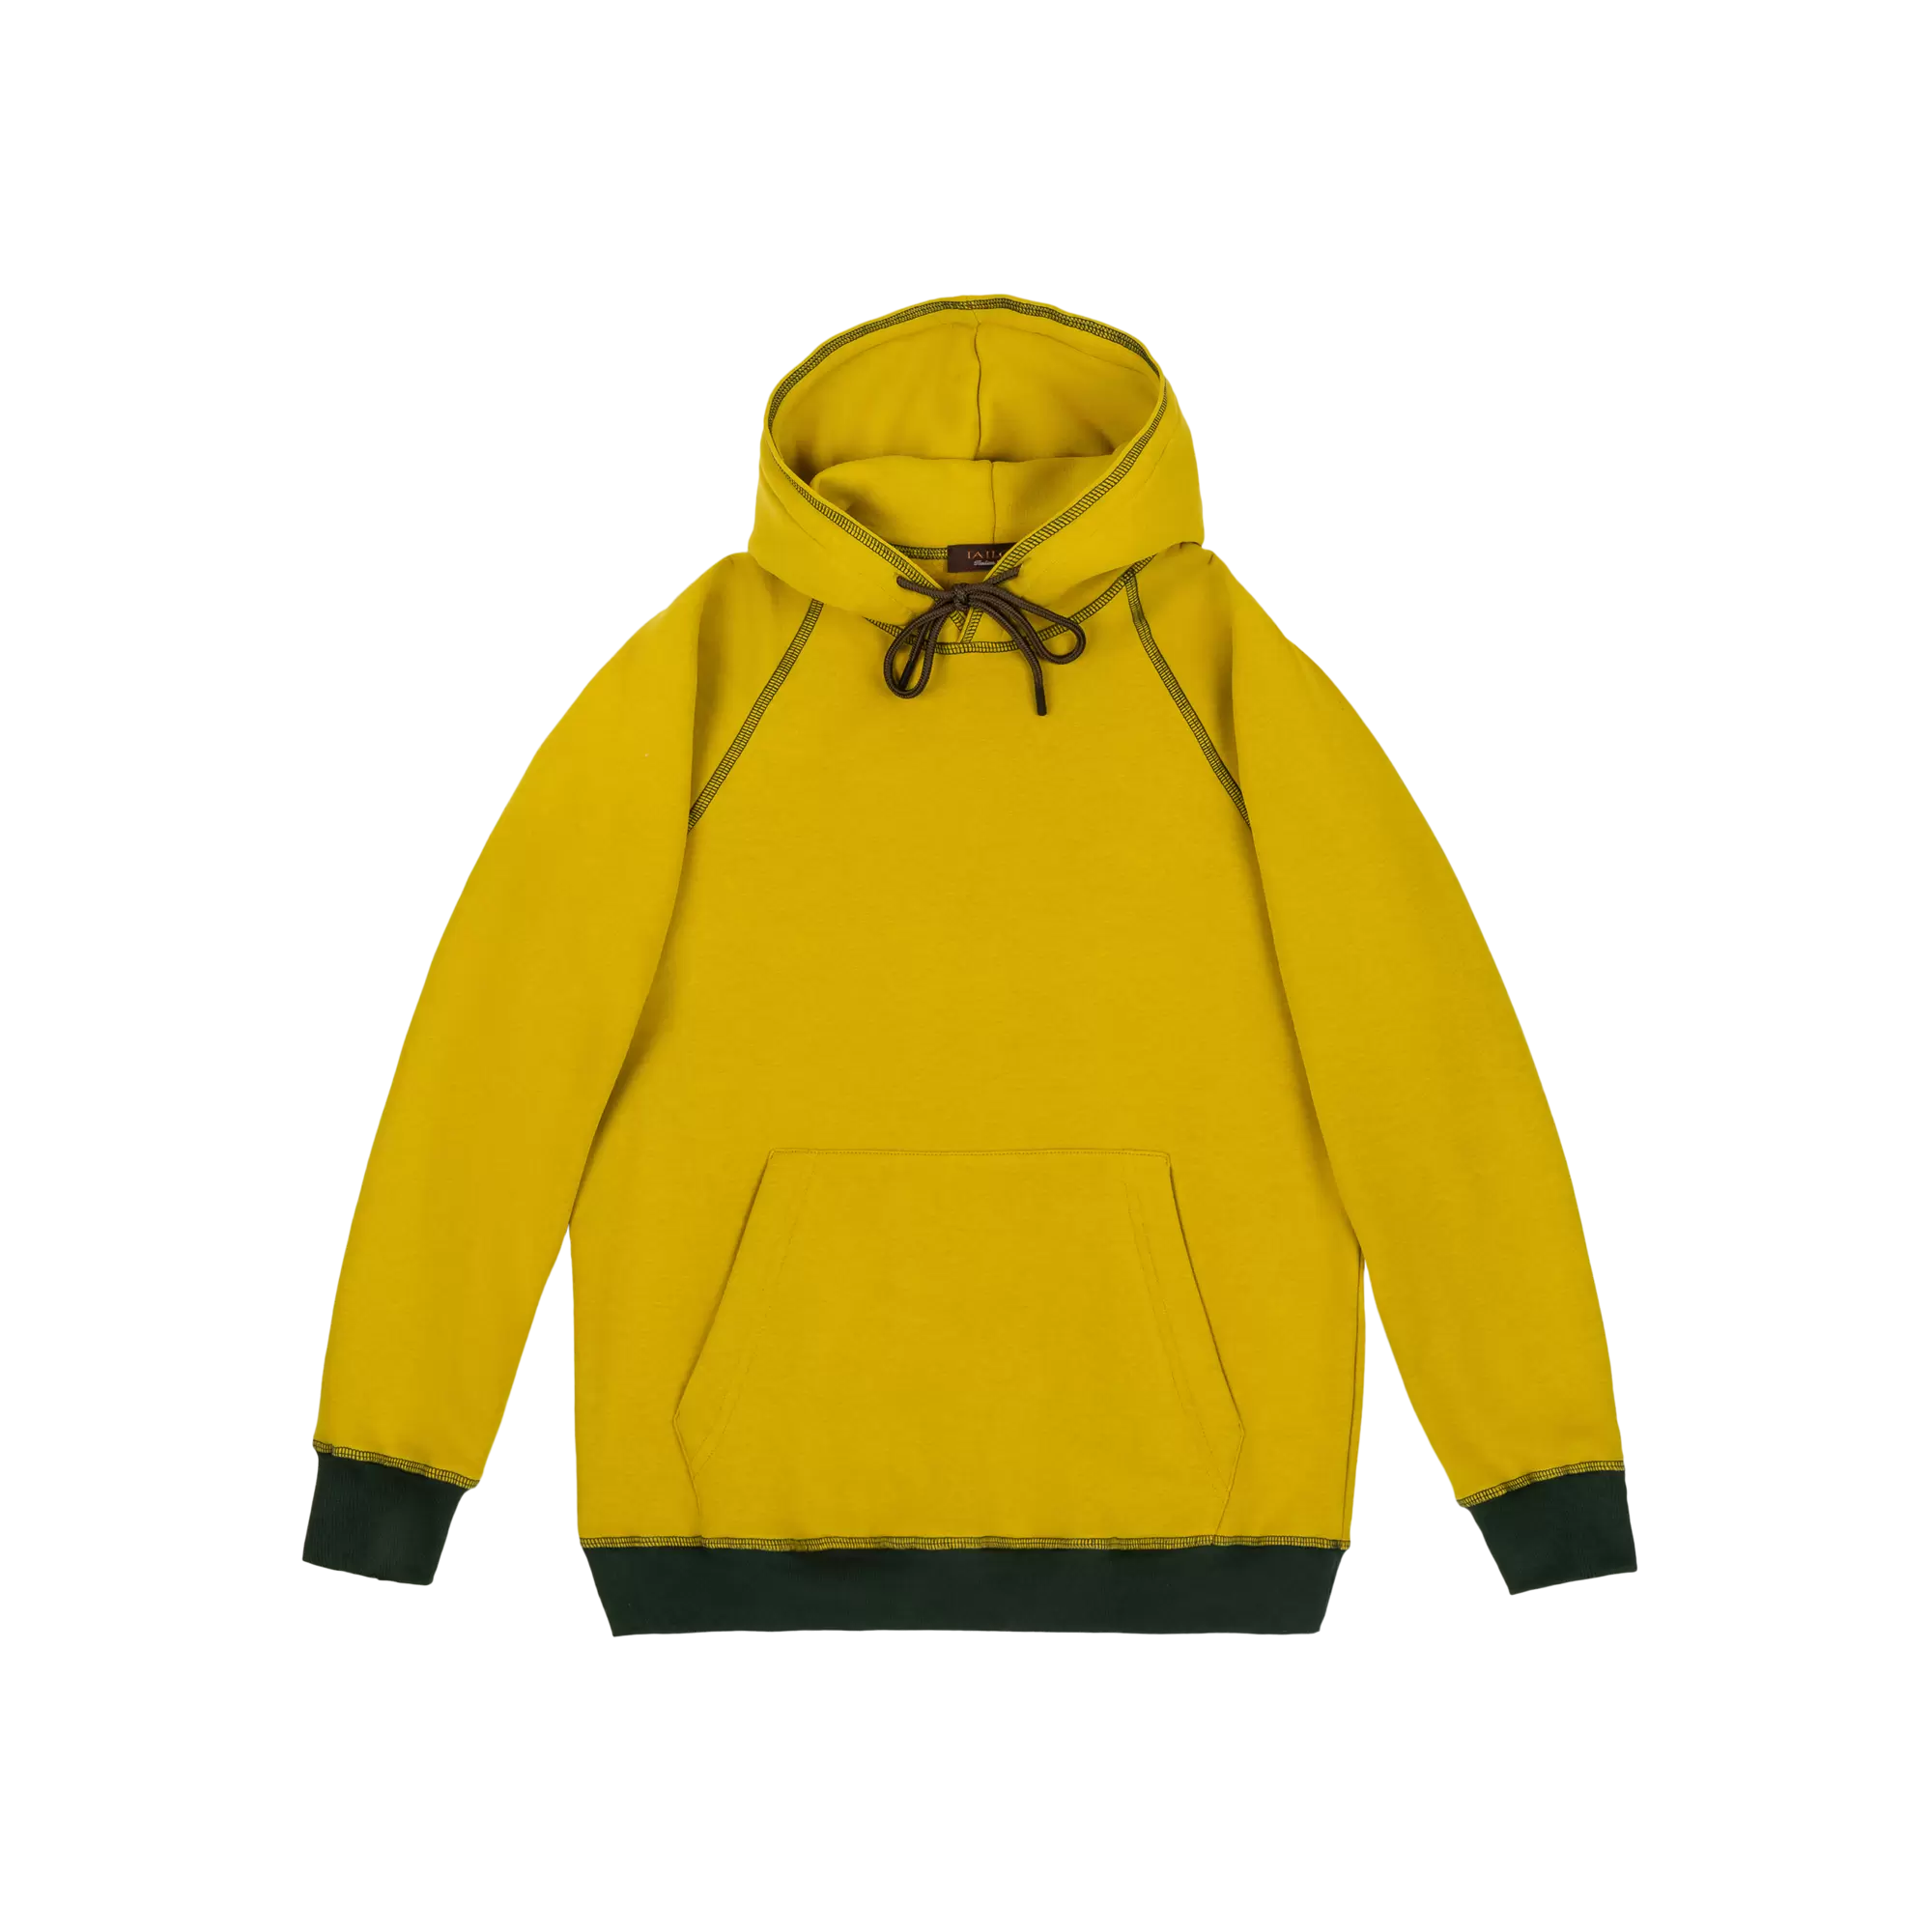 https://www.tailoritalianwear.com/media/amasty/webp/catalog/product/cache/ad40f66addf1e21d90c87b4425d4d5ca/m/e/men_s-yellow-hoodie-sweater-tailor-product-photo2_copy_png.webp